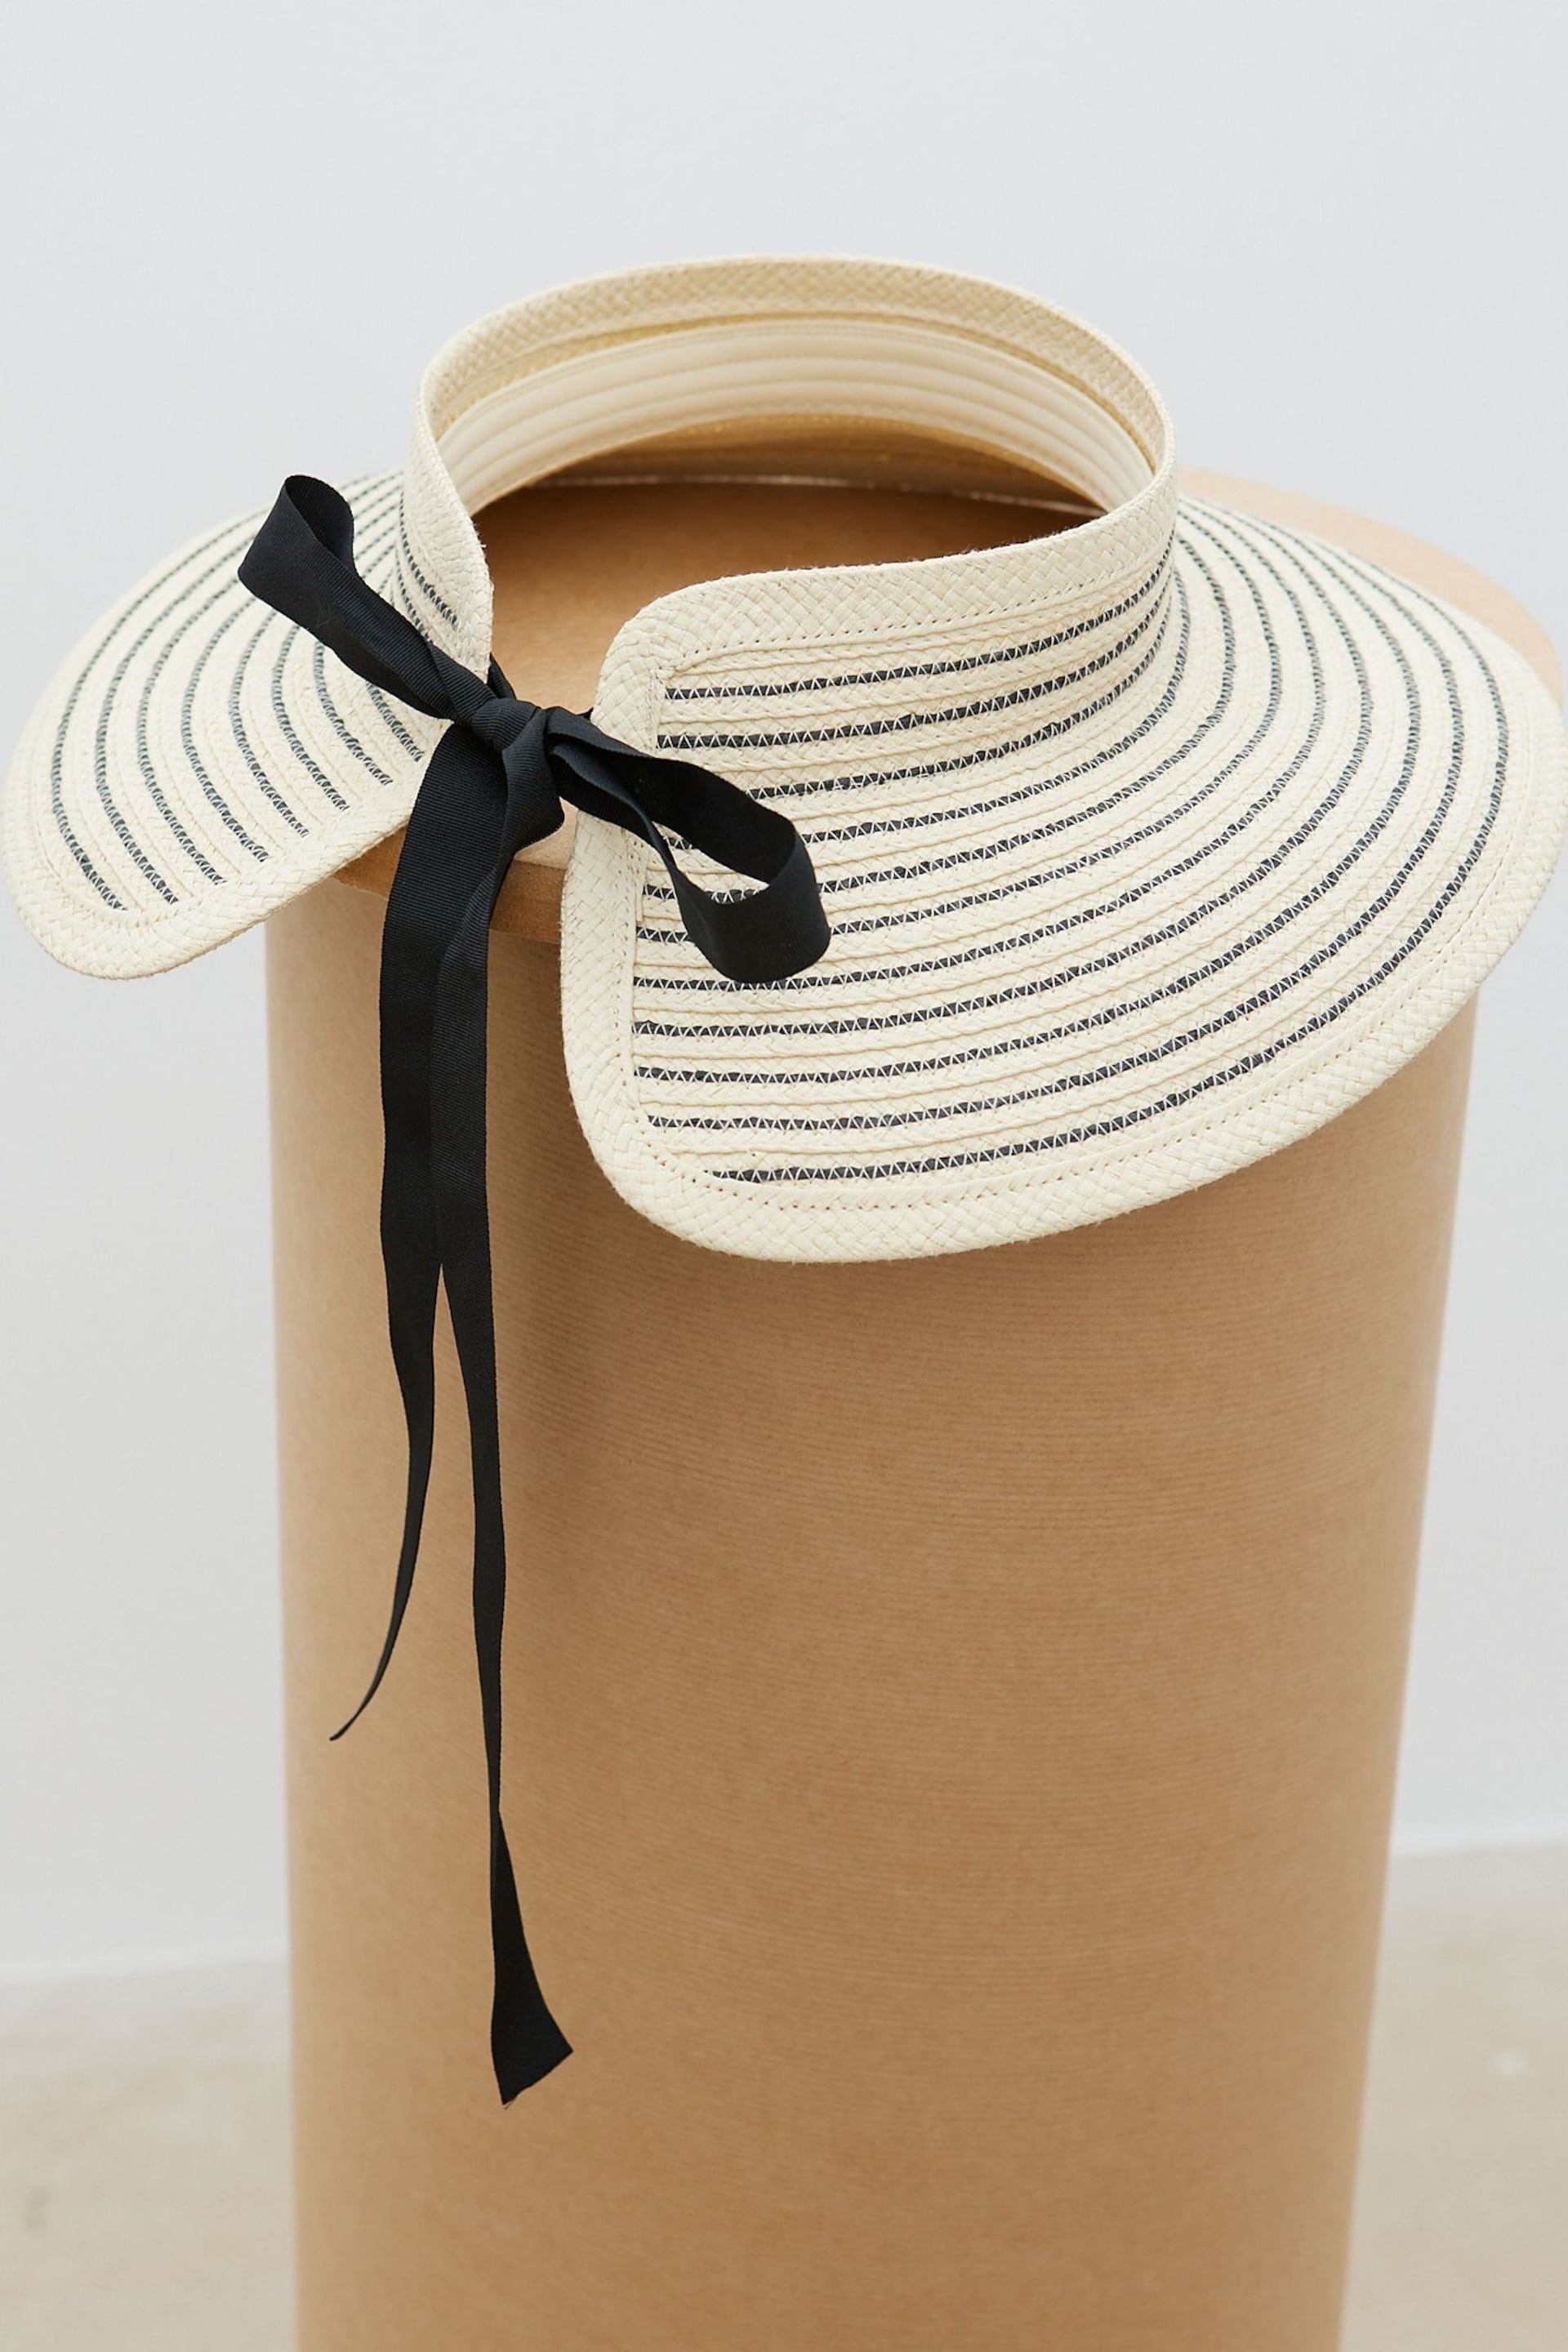 Oliver Bonas Striped Foldable Visor White Hat - Image 6 of 7